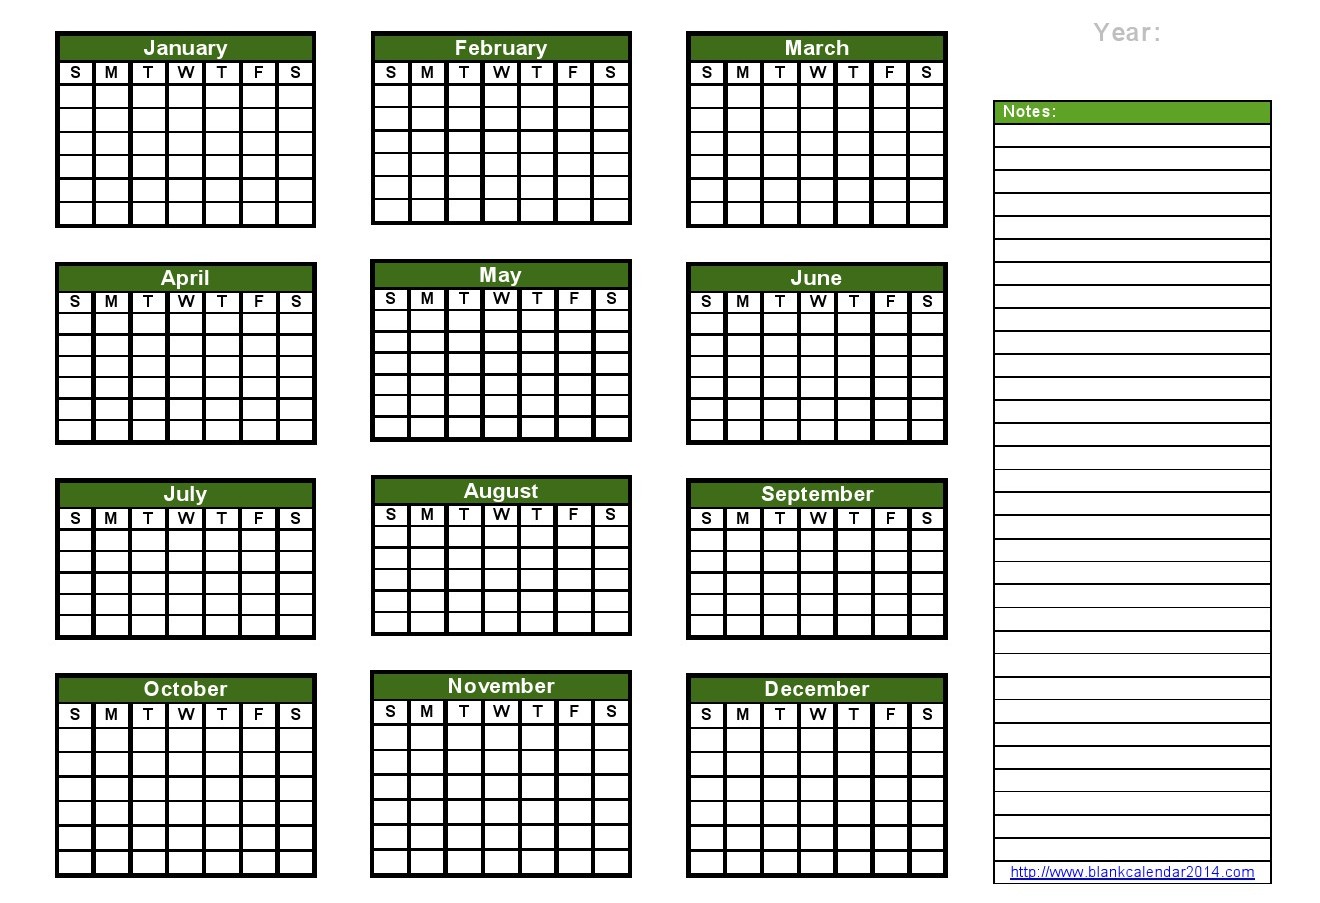 2014 Yearly Calendar | yearly calendar printable